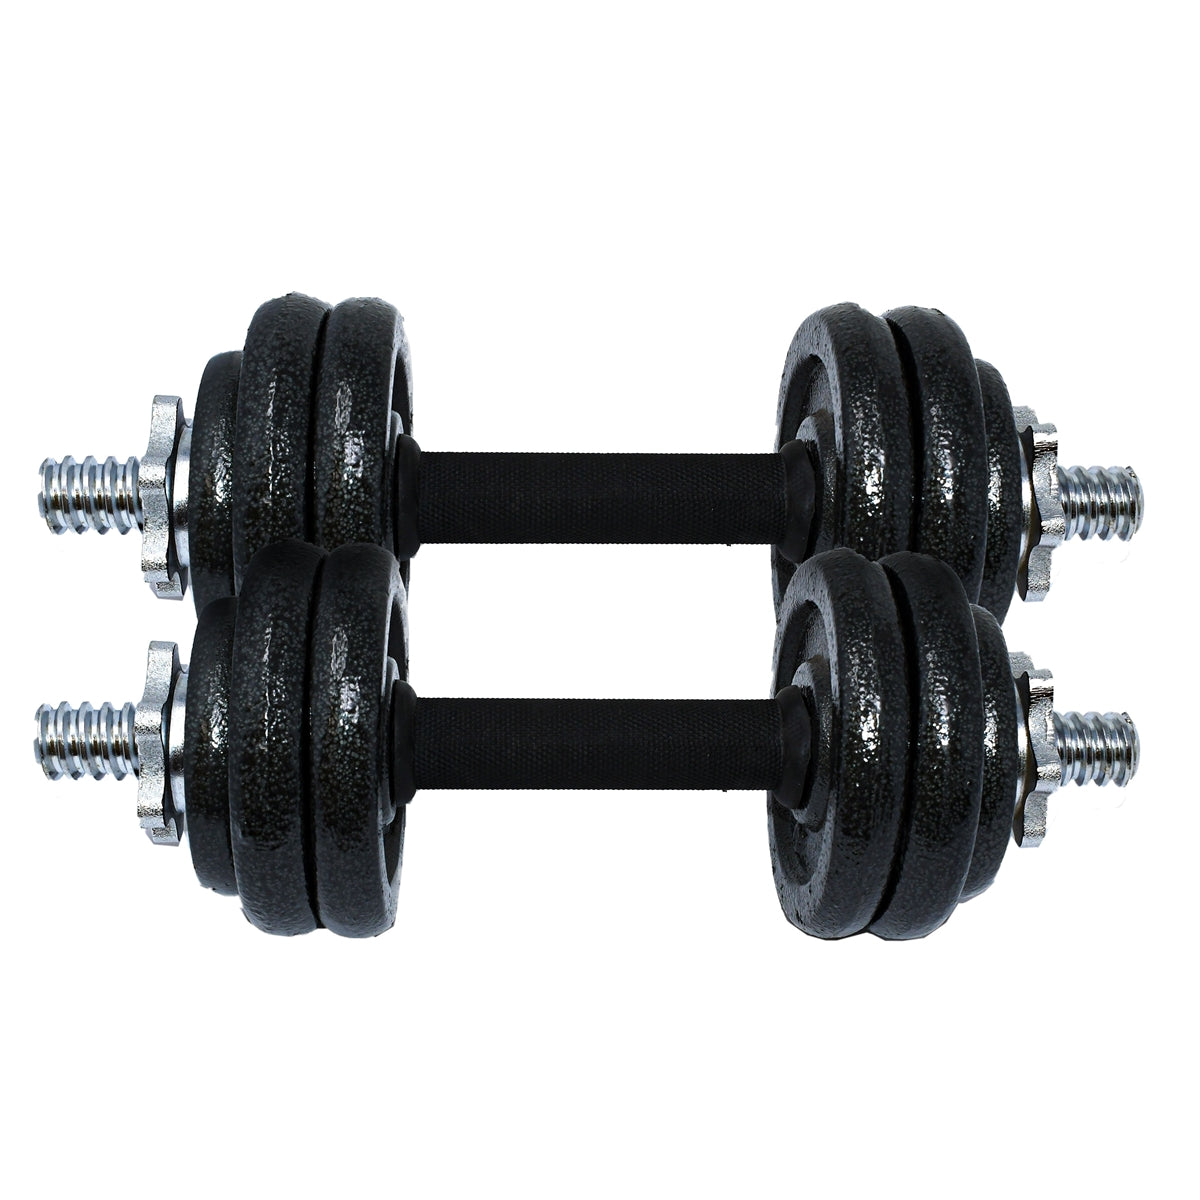 Cast Iron Adjustable Dumbbell Set for Home Gym - 33 lbs (15 kg)